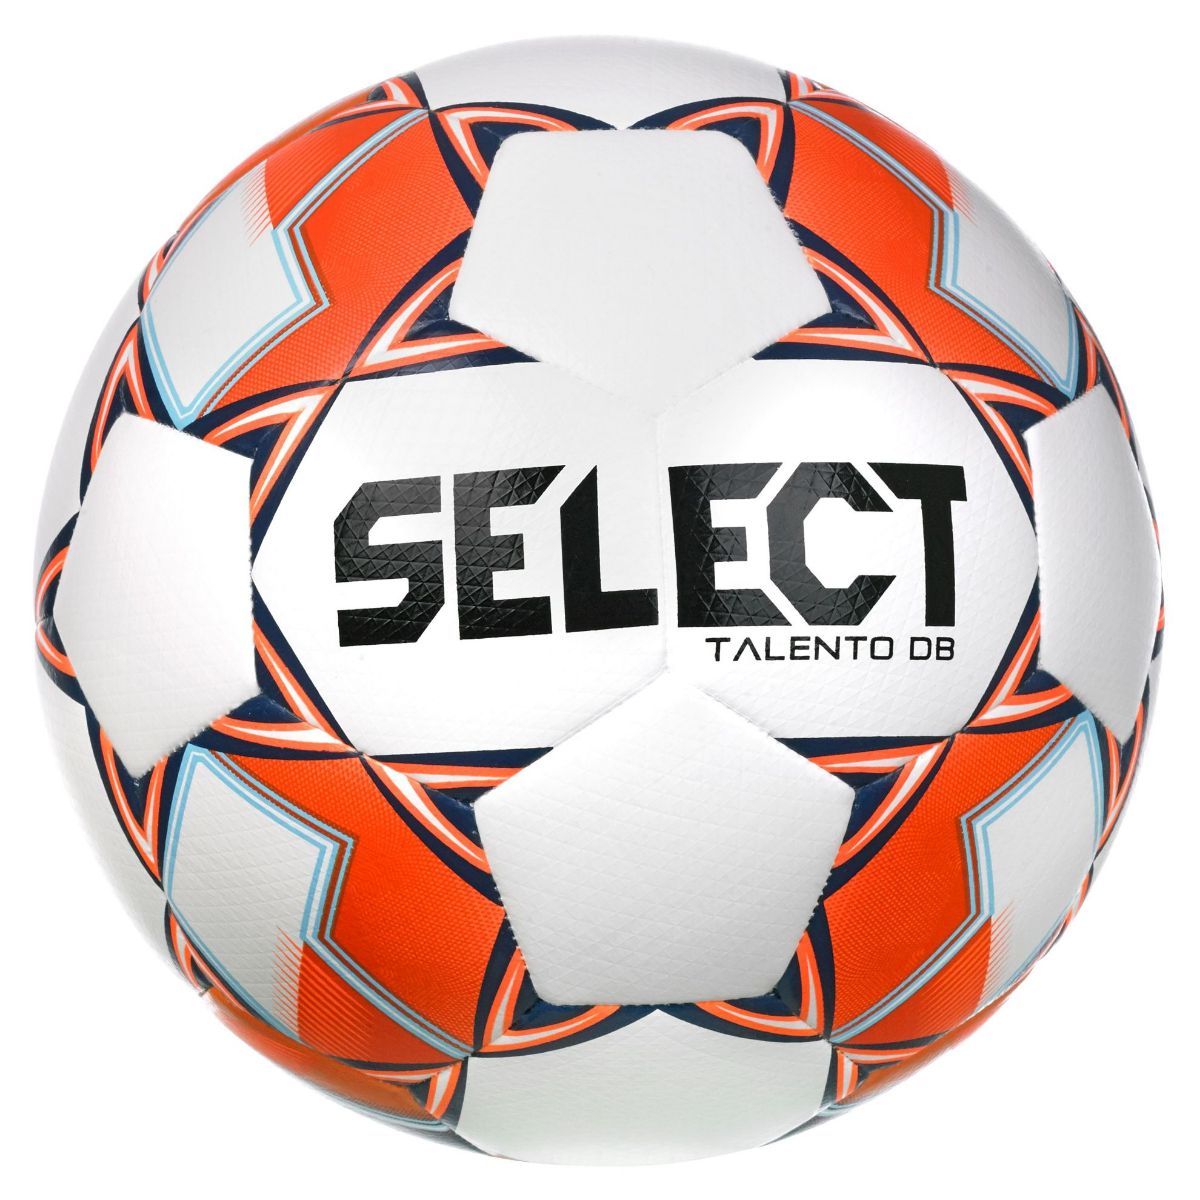 Select_Talento_DB_Lettball_fotball